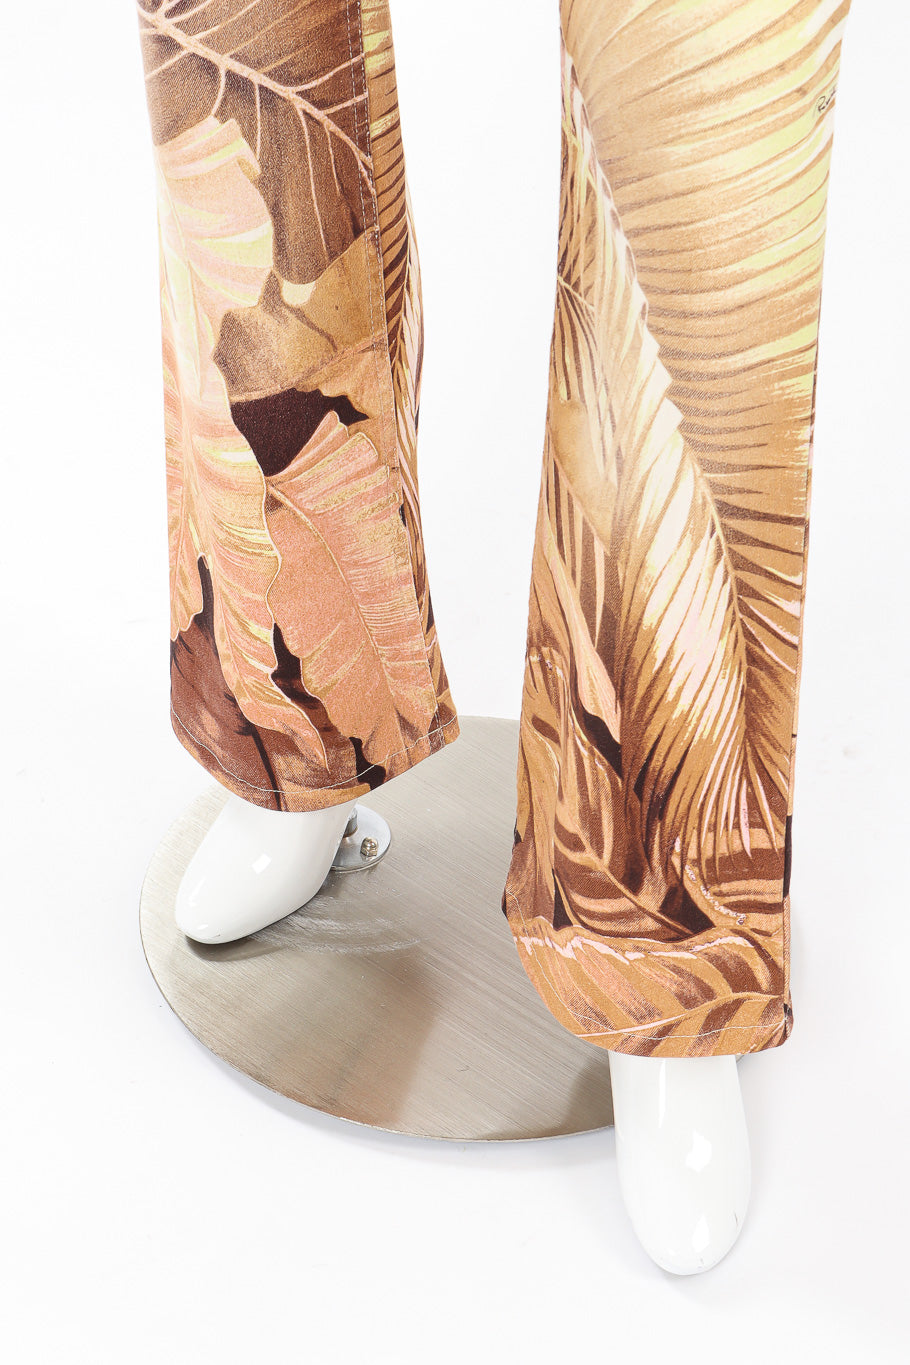 Palm print jeans by Roberto Cavalli on mannequin hems close @recessla